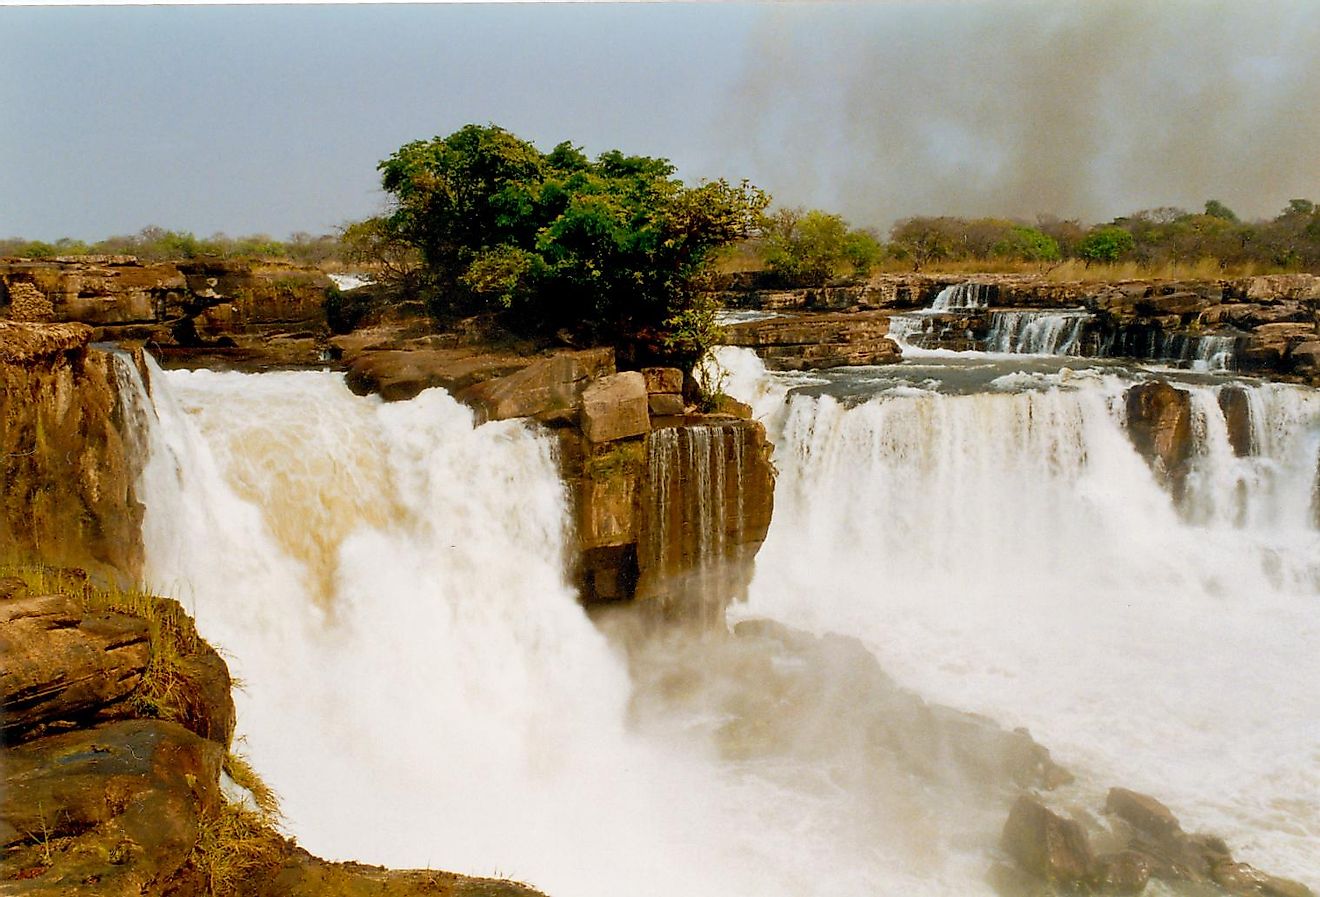 Tazua Falls on the Kwango River in Angola.